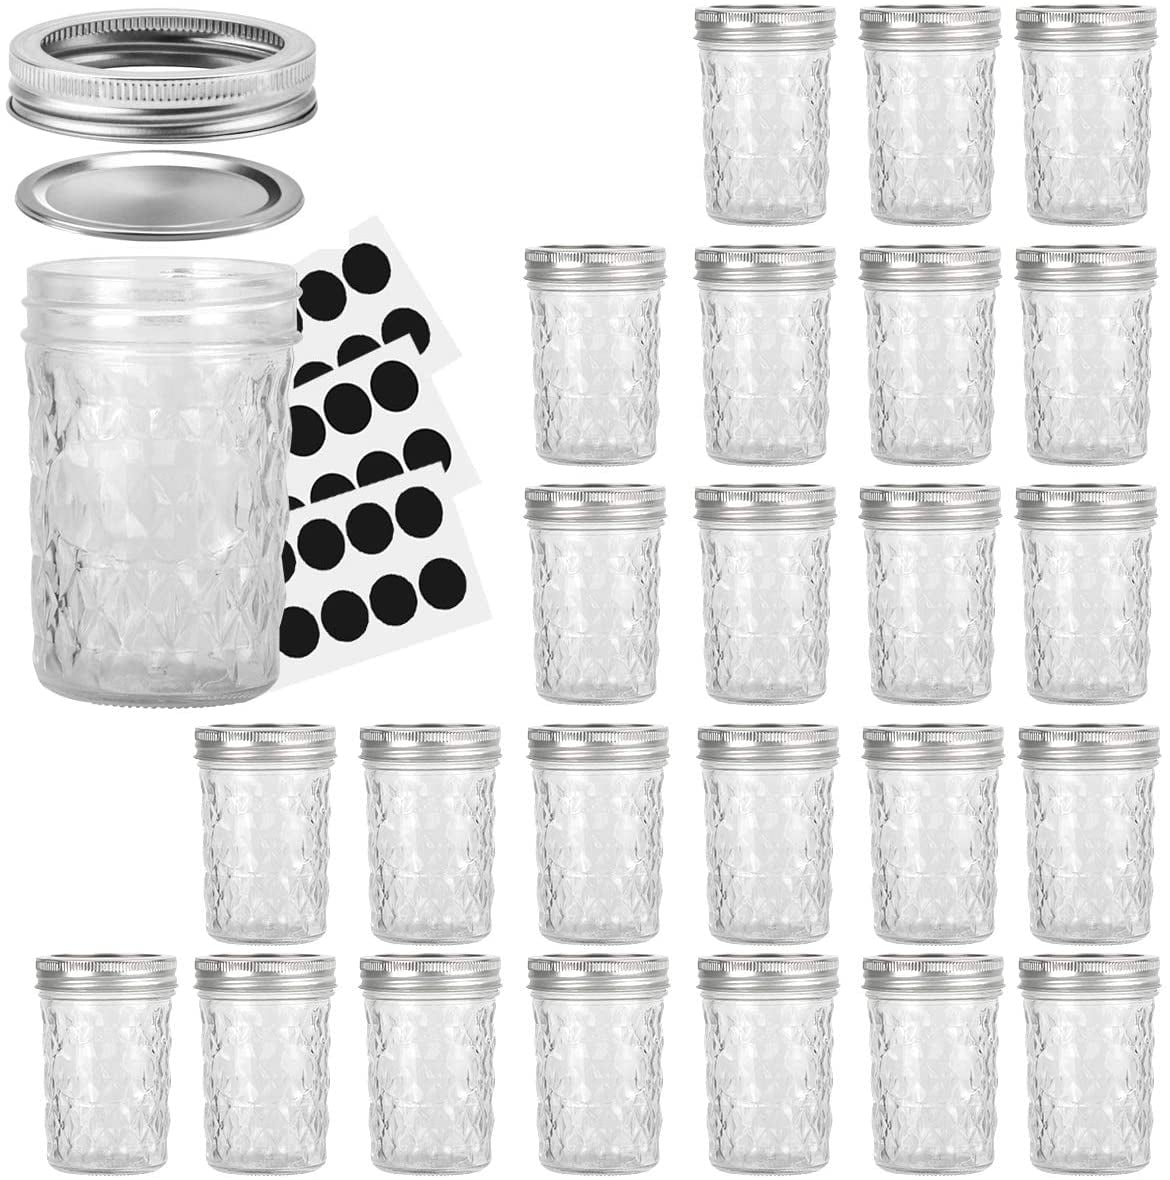 Free Shipping VERONES Mason Jars Canning Jars 4 OZ Jelly Jars With Regular .. 